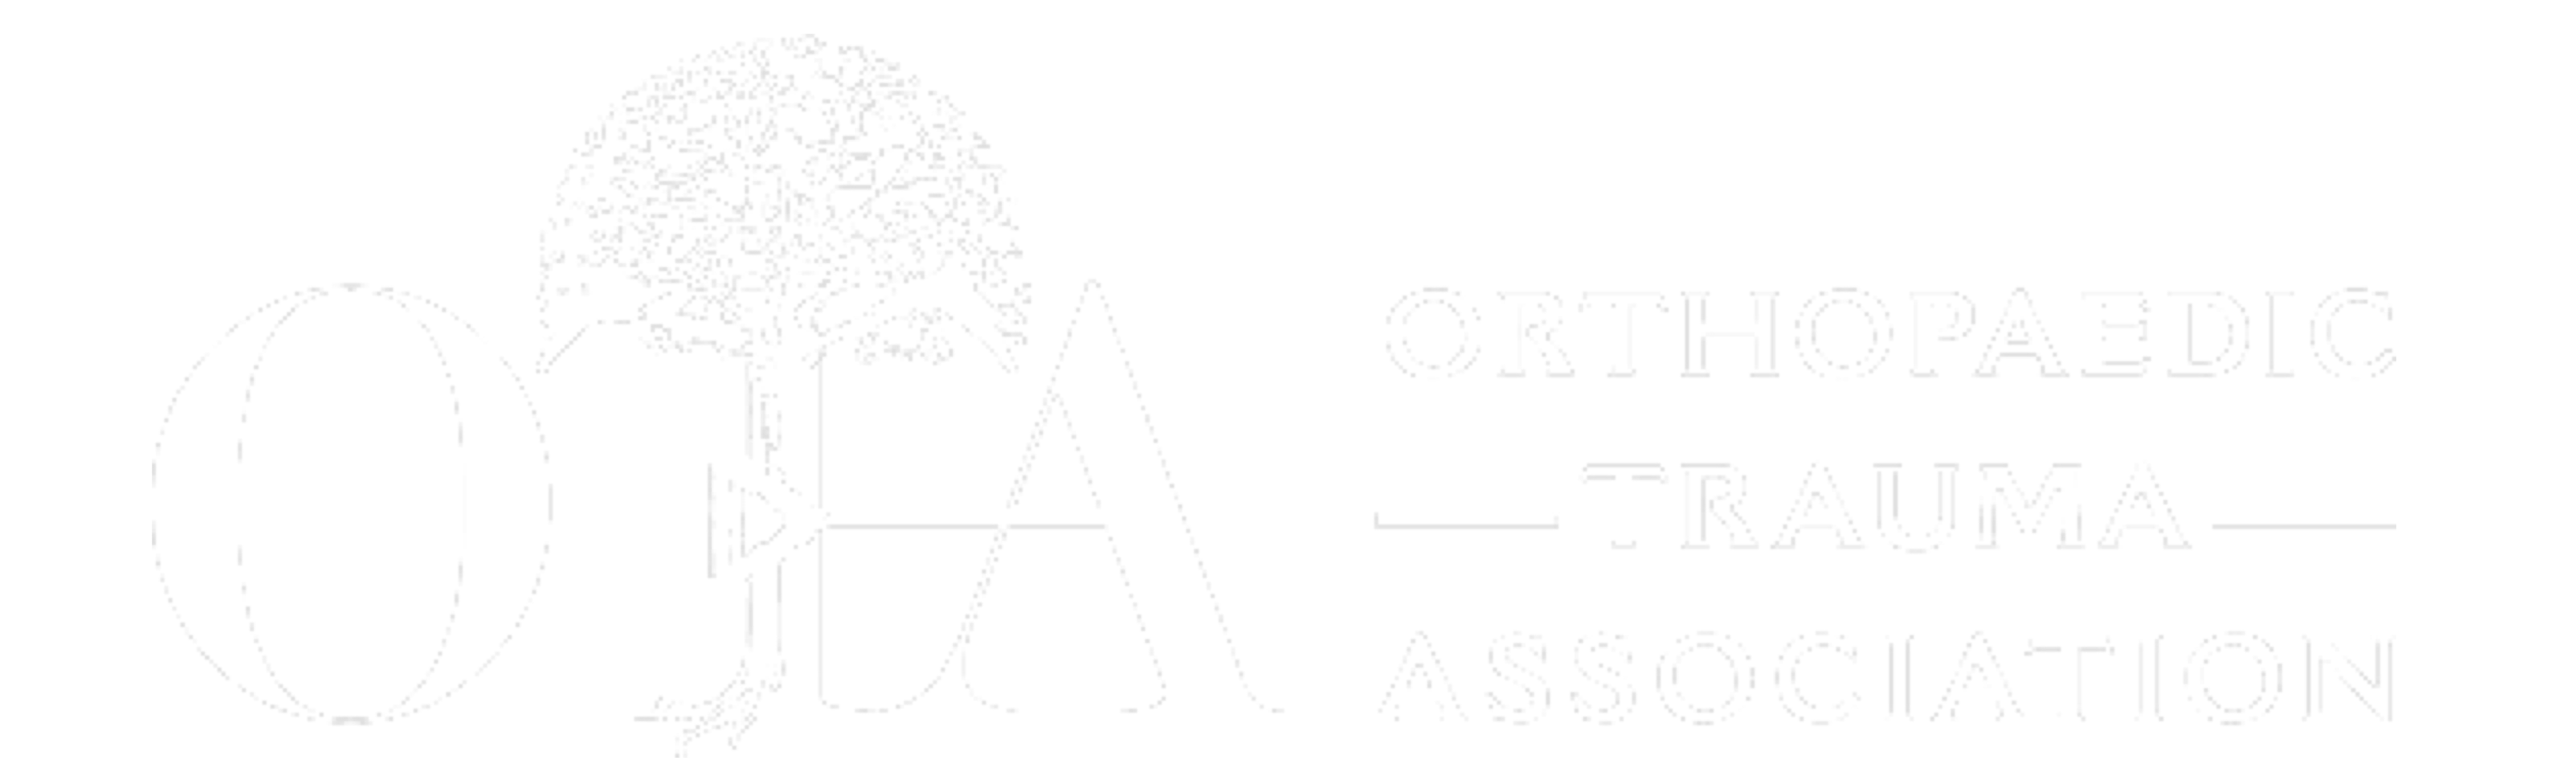 Orthopaedic Trauma Association Textbook logo